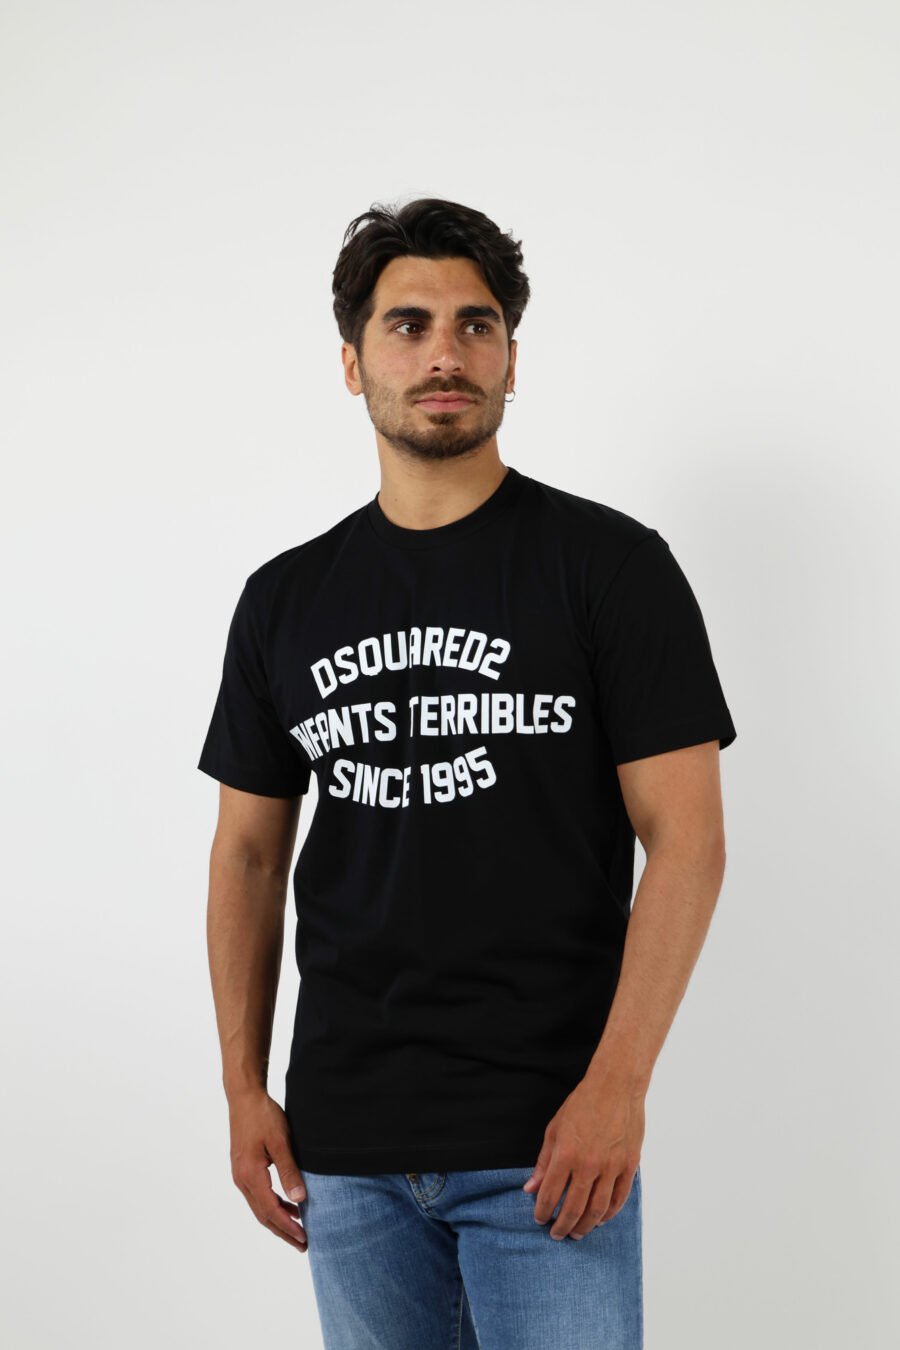 Camiseta negra con maxilogo "enfants terribles since 1995" - 8054148504212 1 1